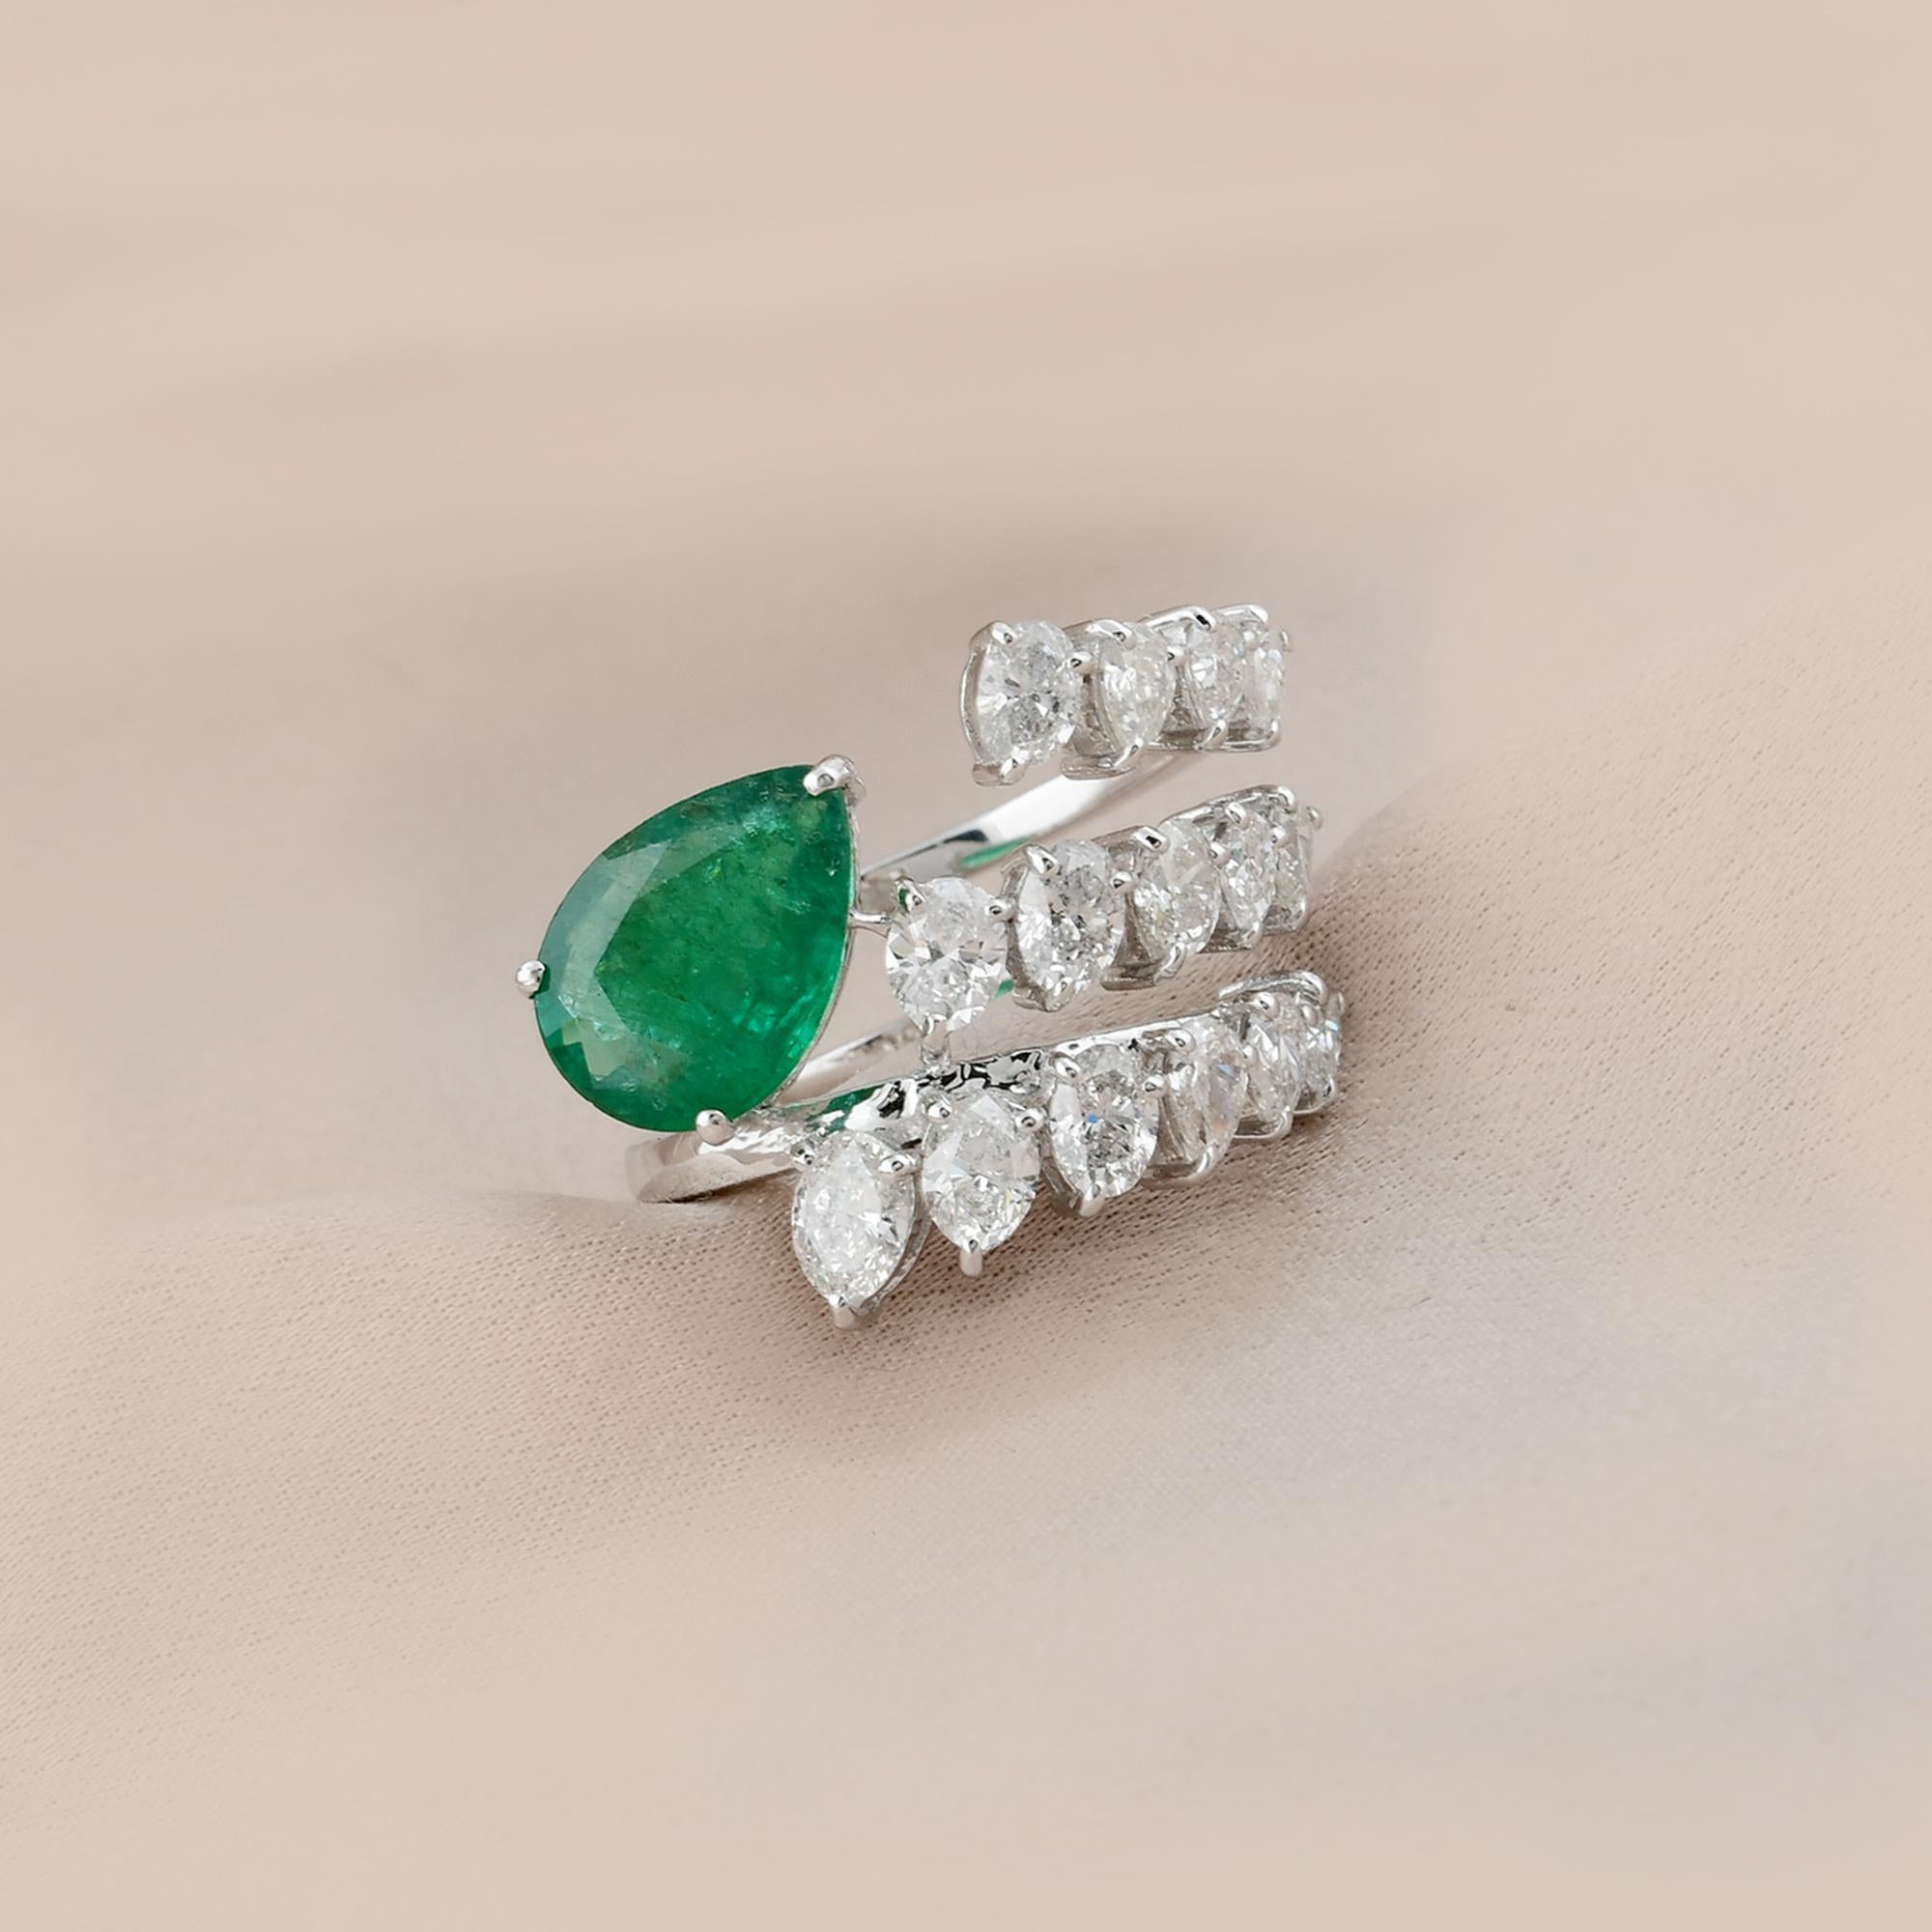 For Sale:  Zambian Emerald Gemstone Spiral Ring Oval Diamond 18 Karat White Gold Jewelry 4